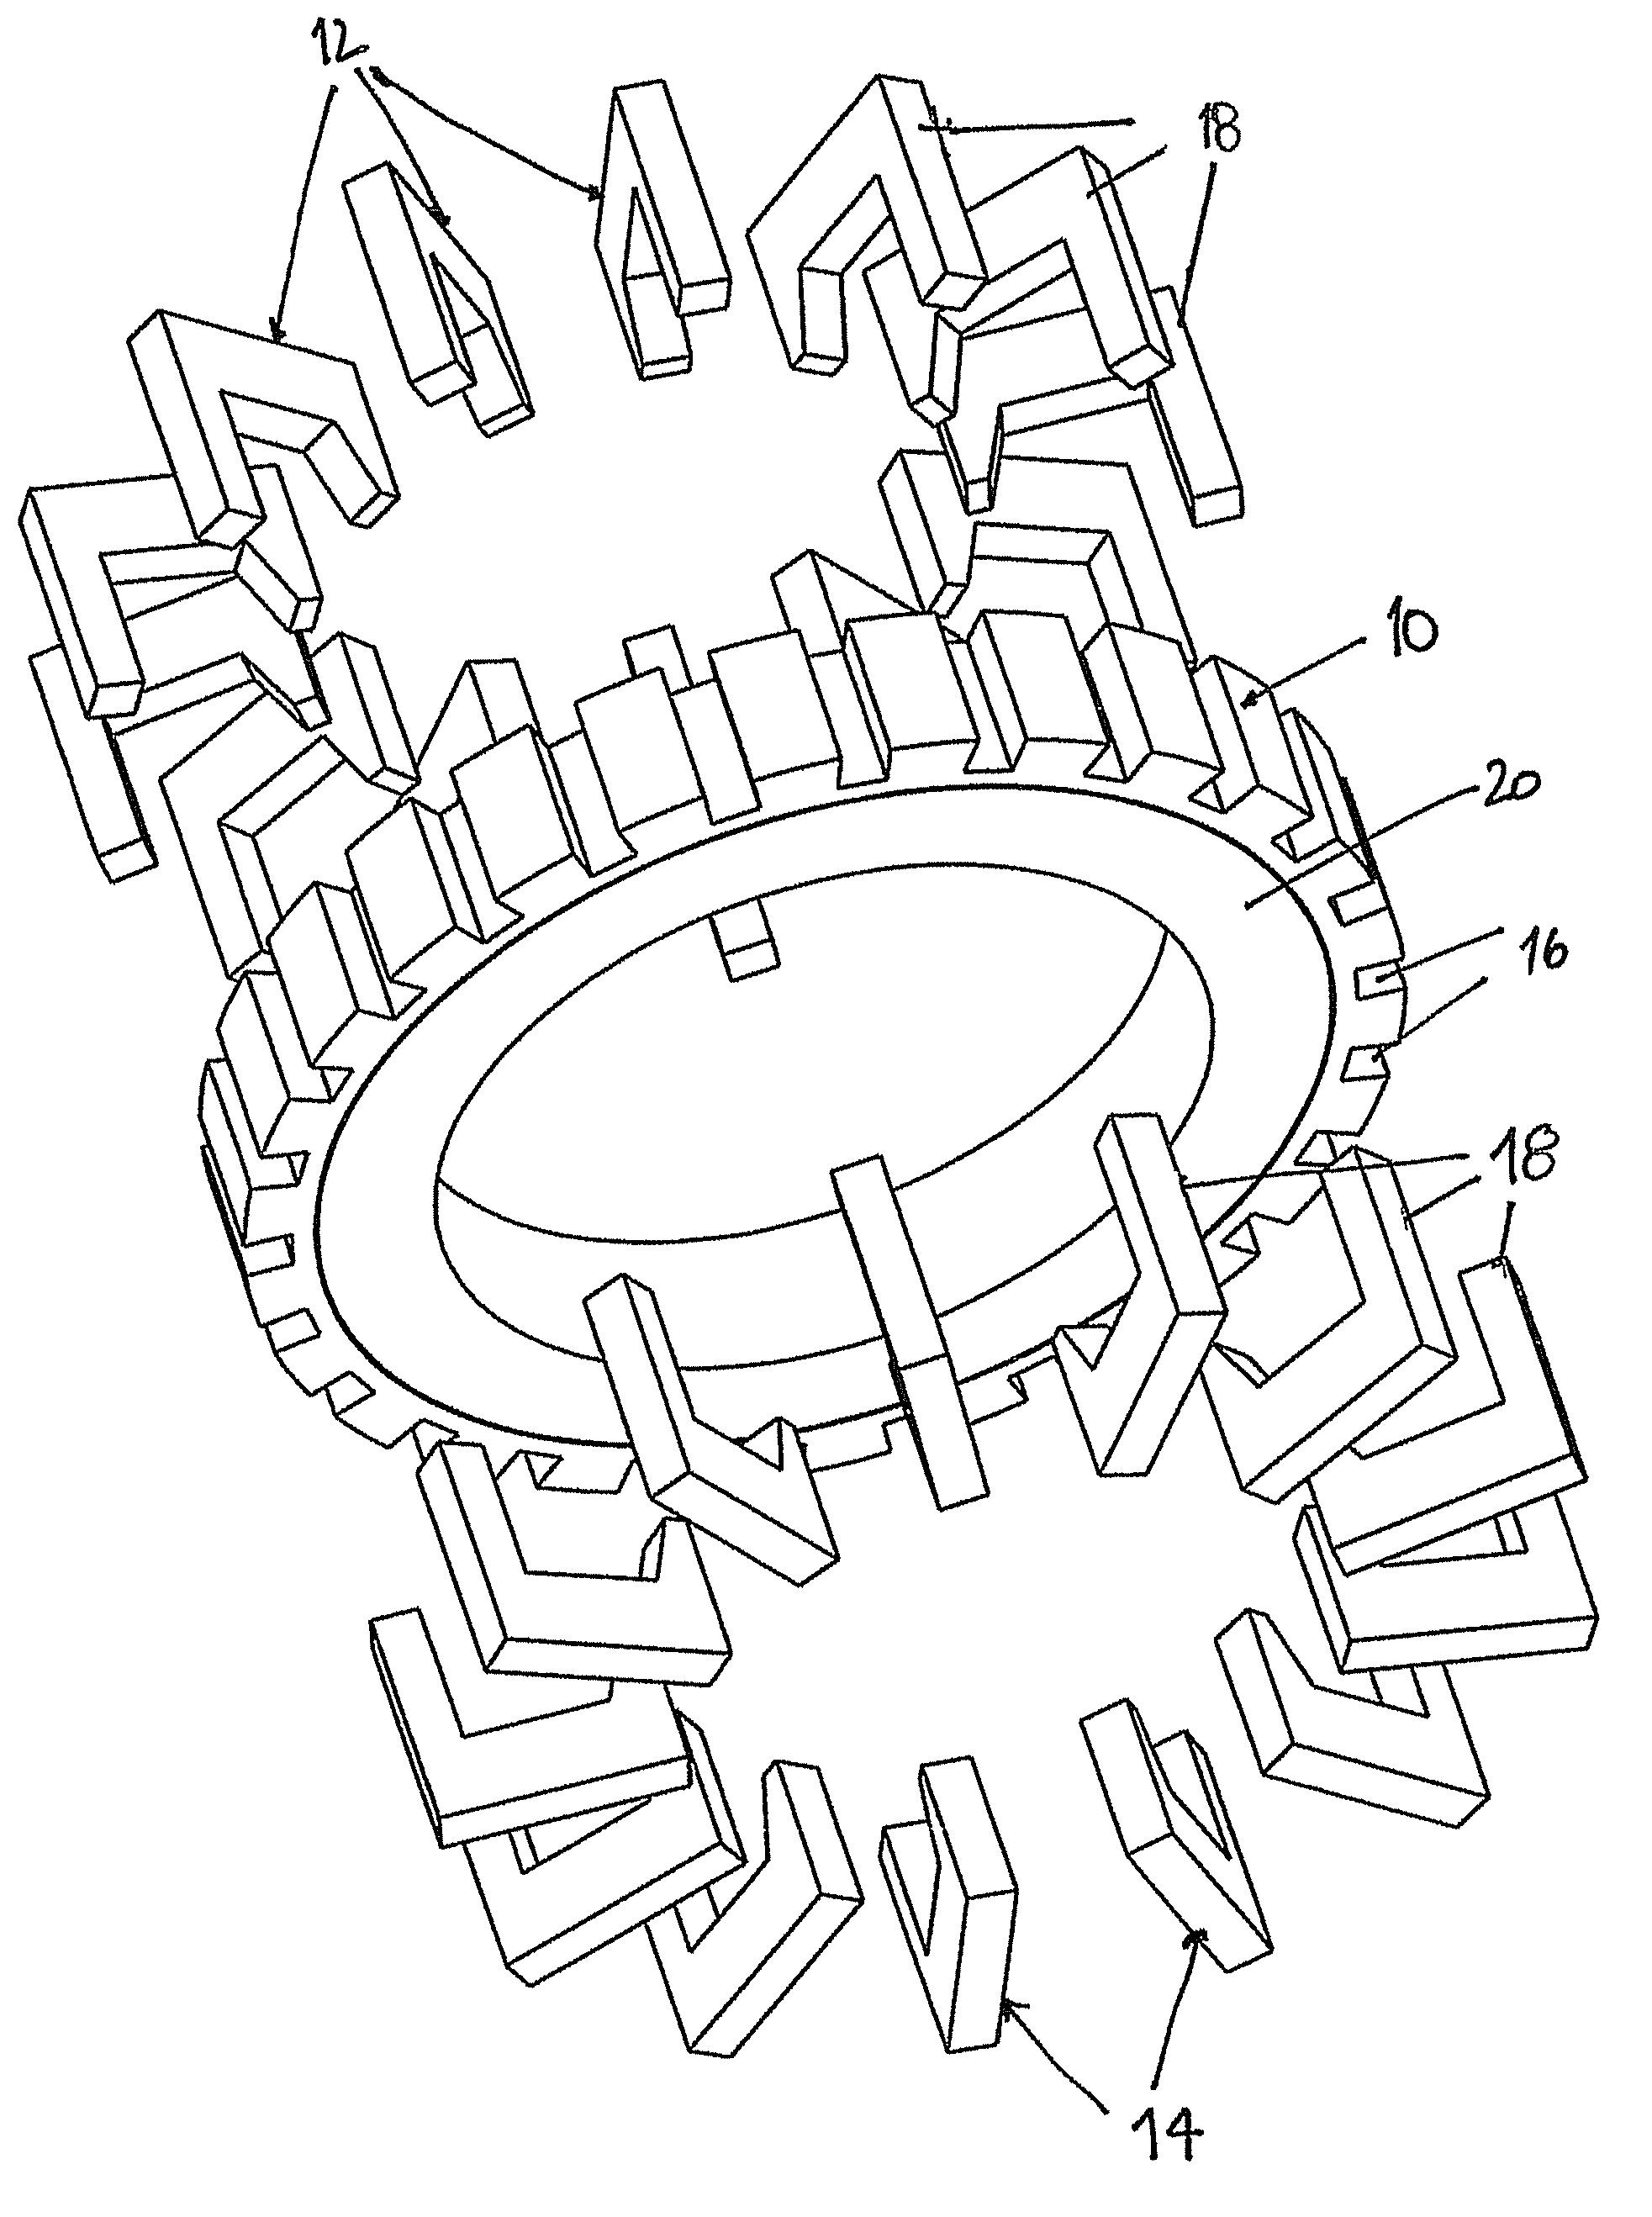 Stator arrangement and rotor arrangement for a transverse flux machine